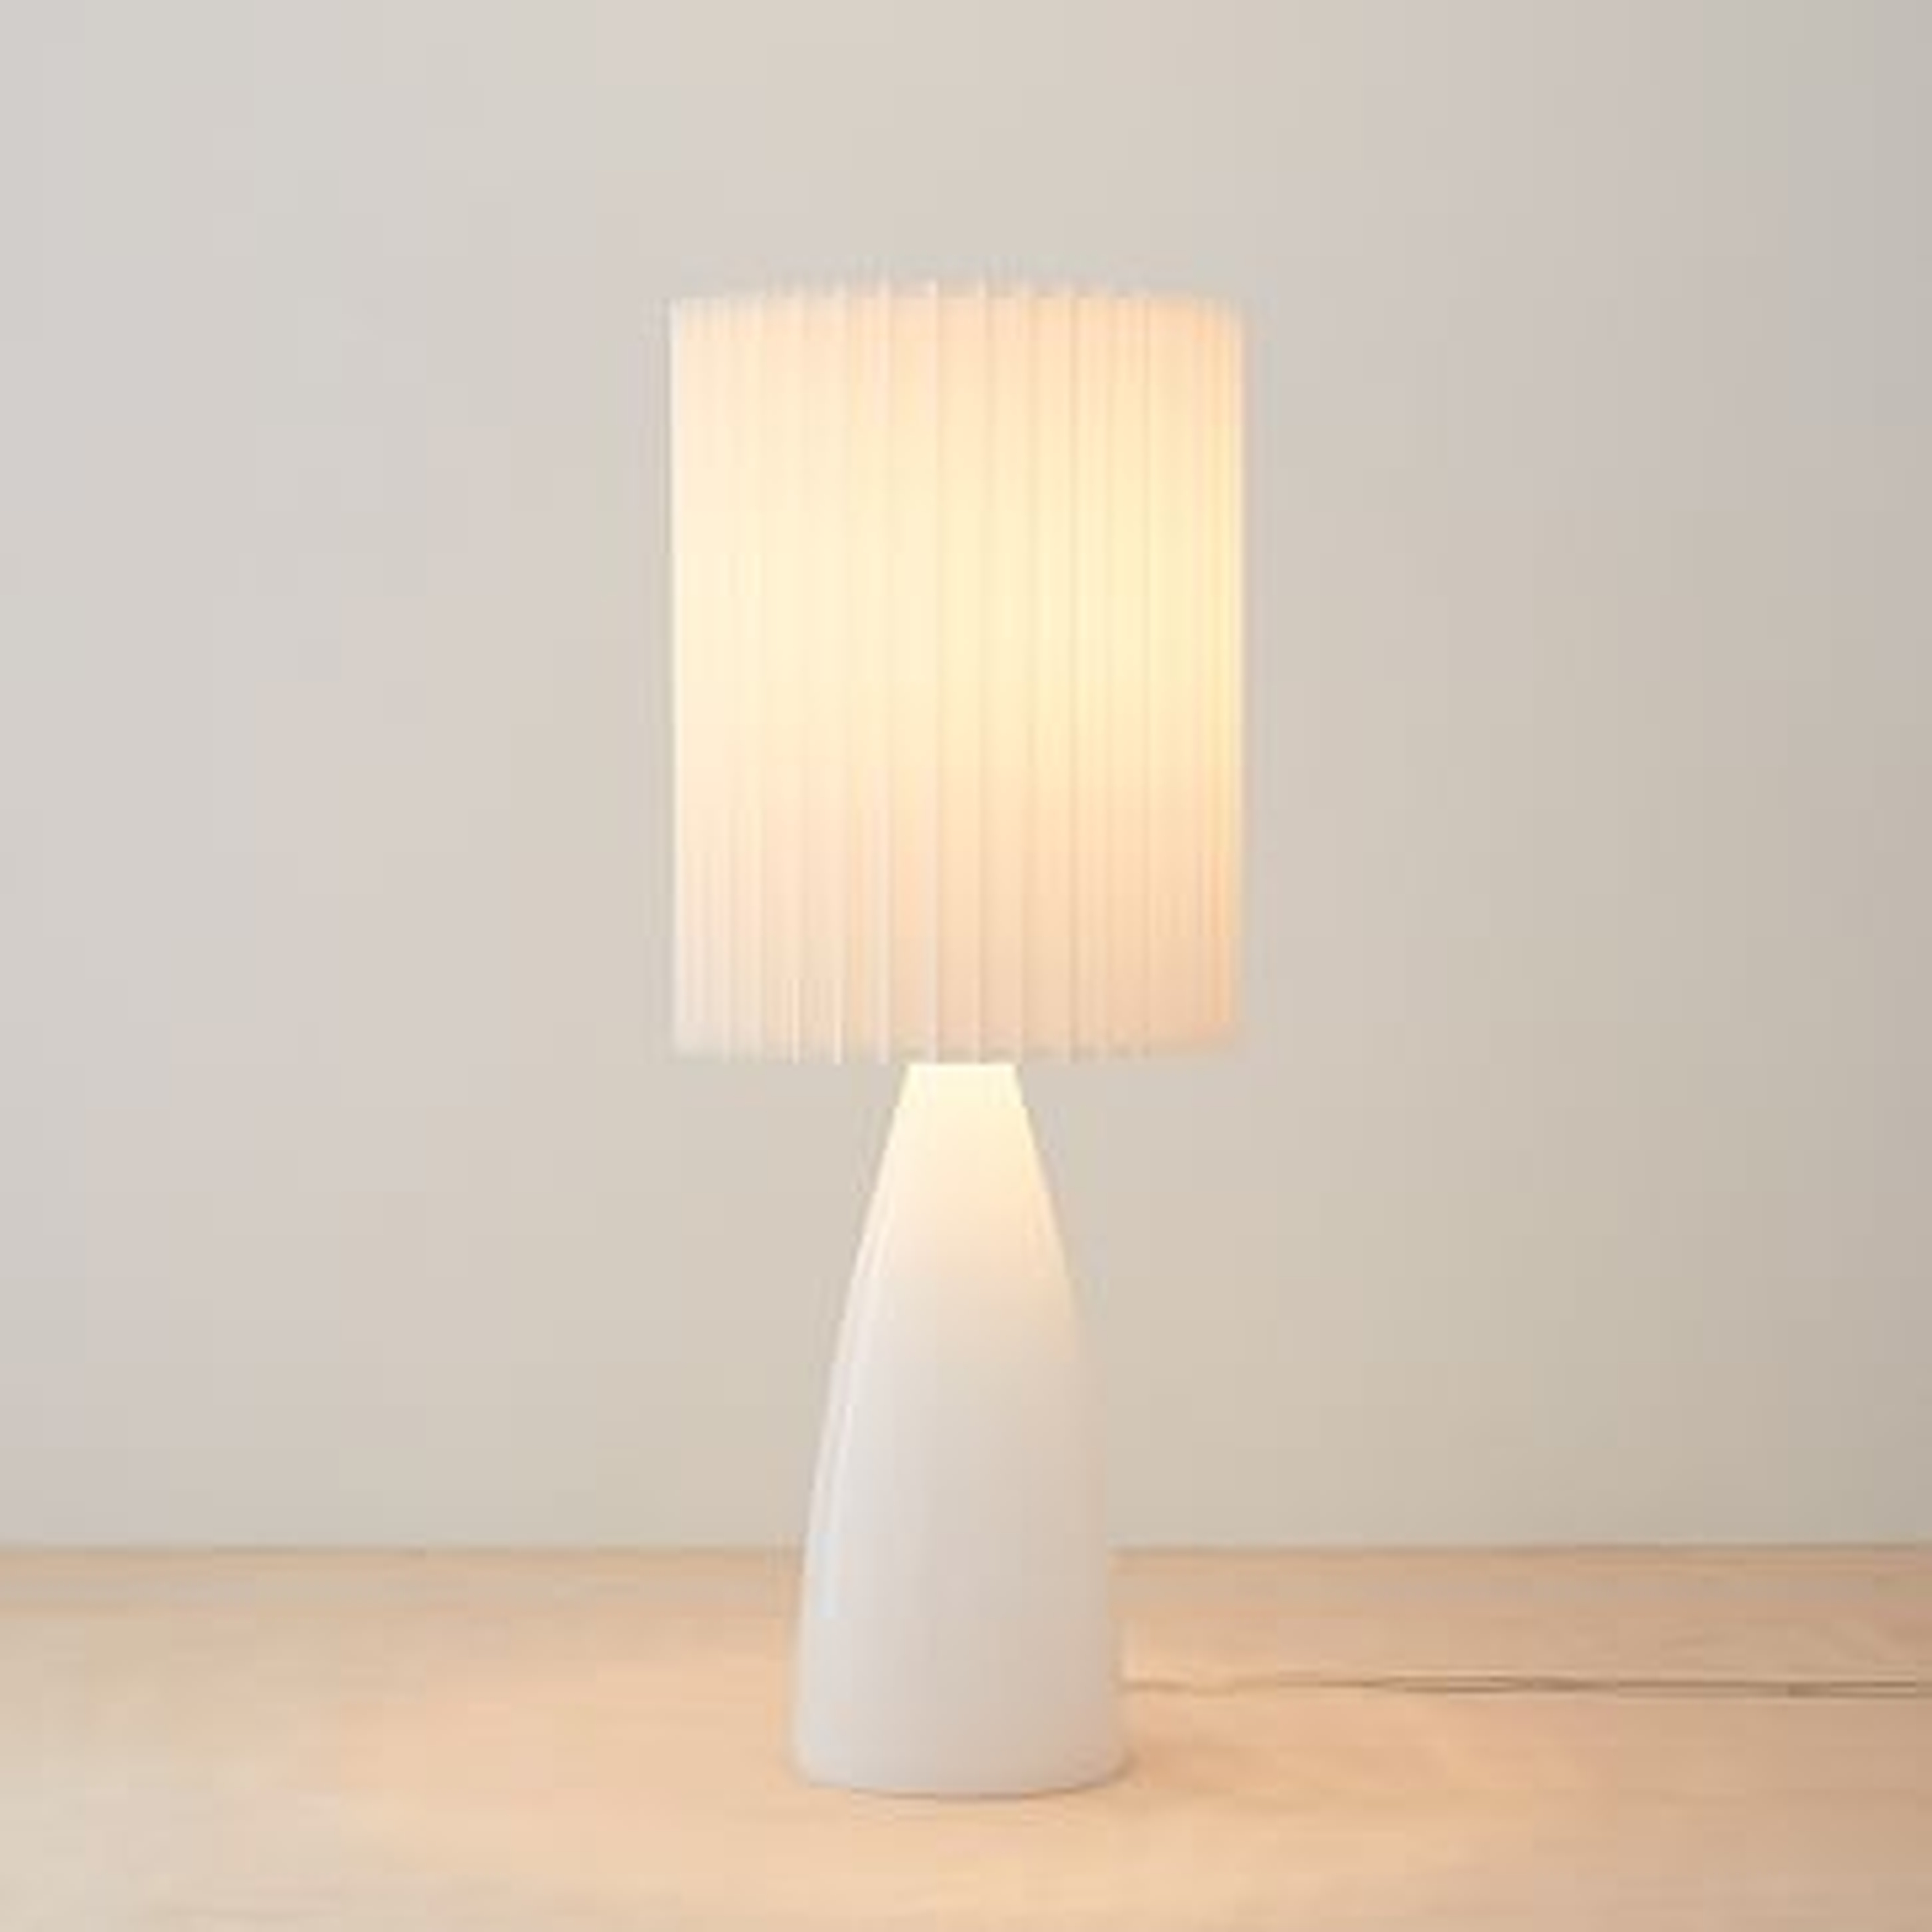 Delilah Table Lamp, Small, White, Cased - West Elm